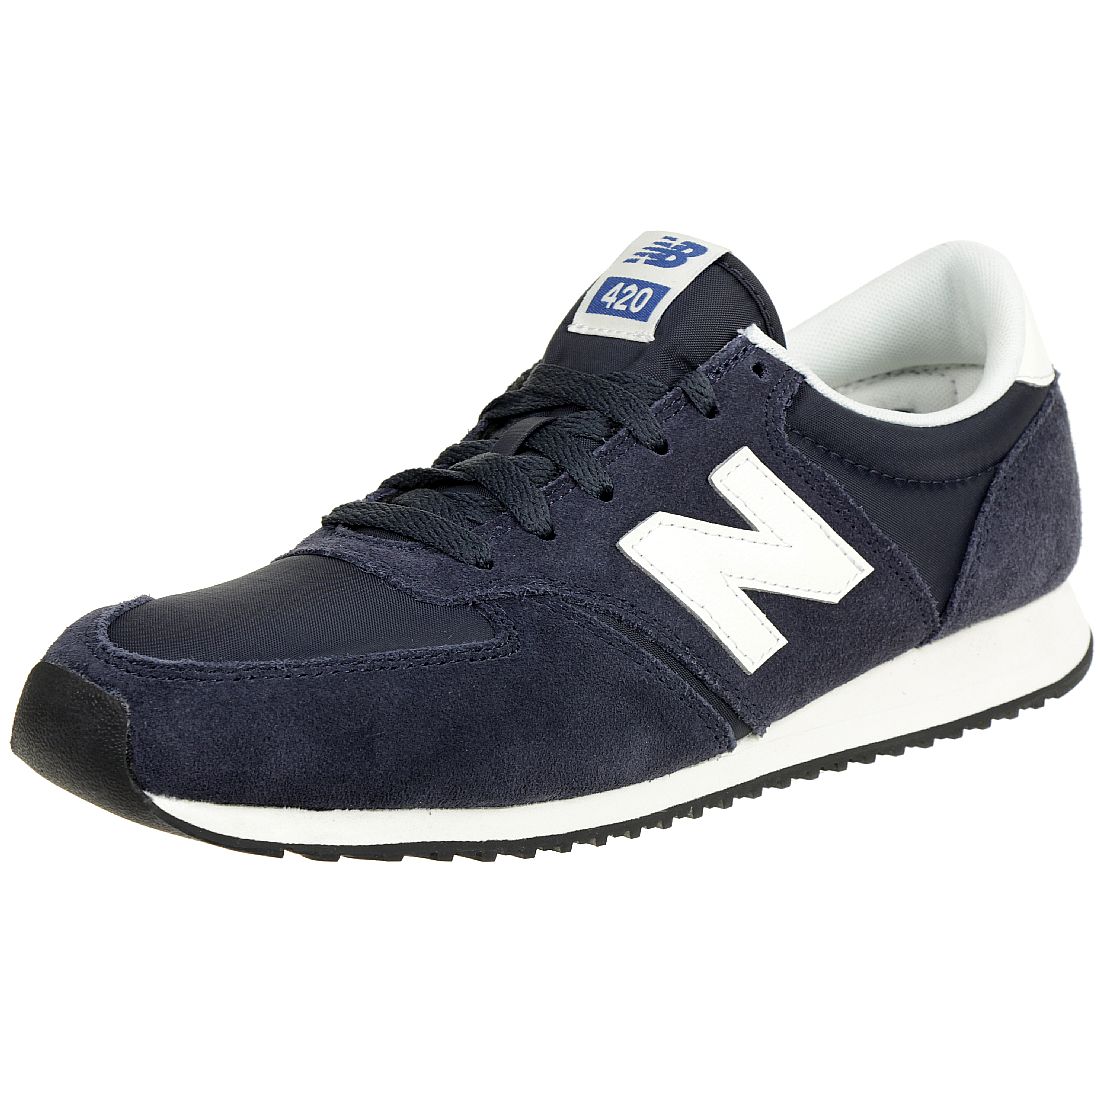 New Balance U420 NVB Classic Sneaker Herren Schuhe Navy Blau